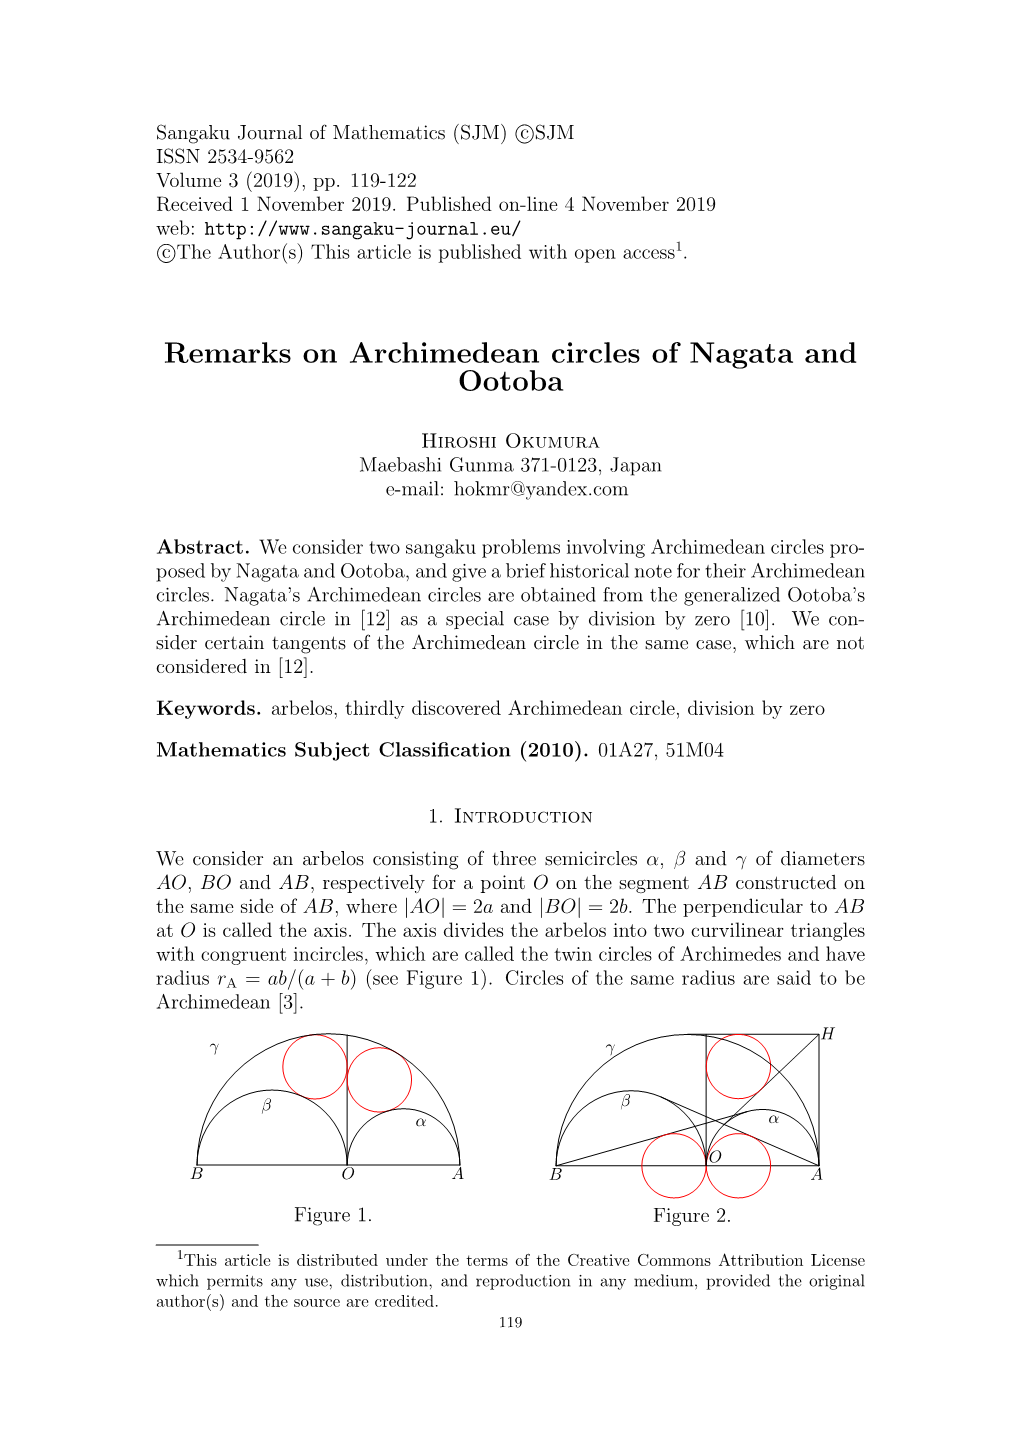 Hiroshi Okumura, Remarks on Archimedean Circles of Nagata And